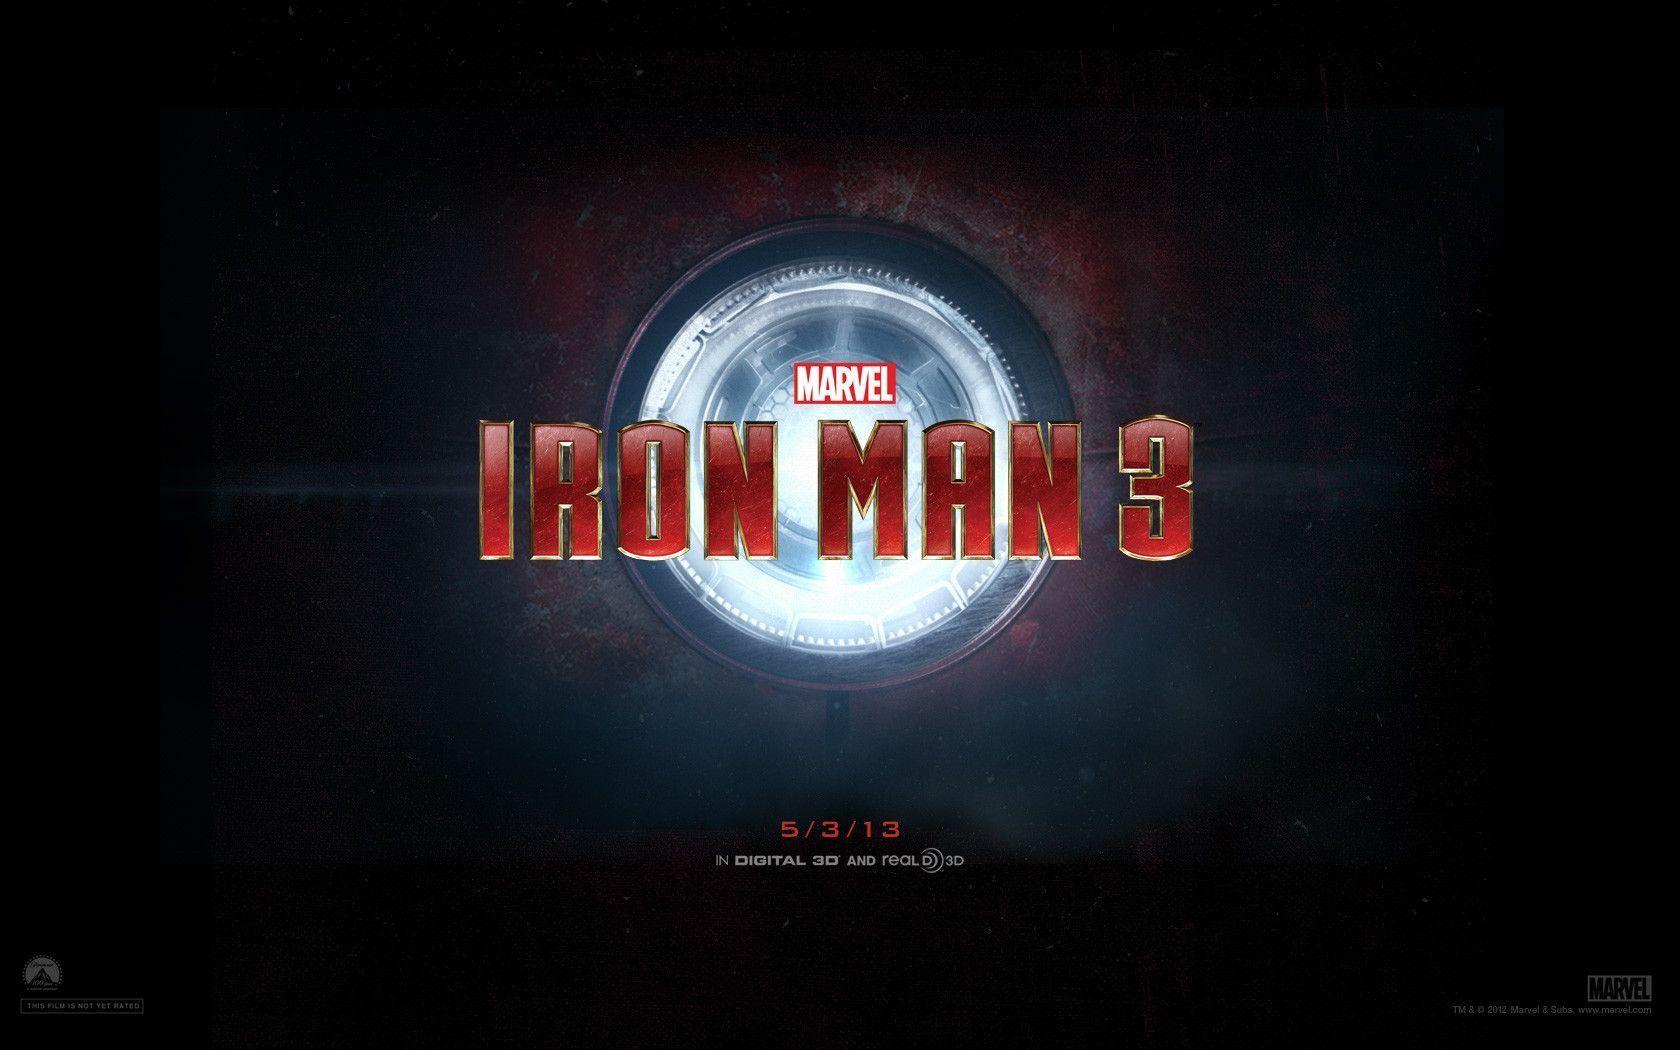 Tony Stark Iron Man 3 wallpaper1. Cool HD Wallpaper 1080p